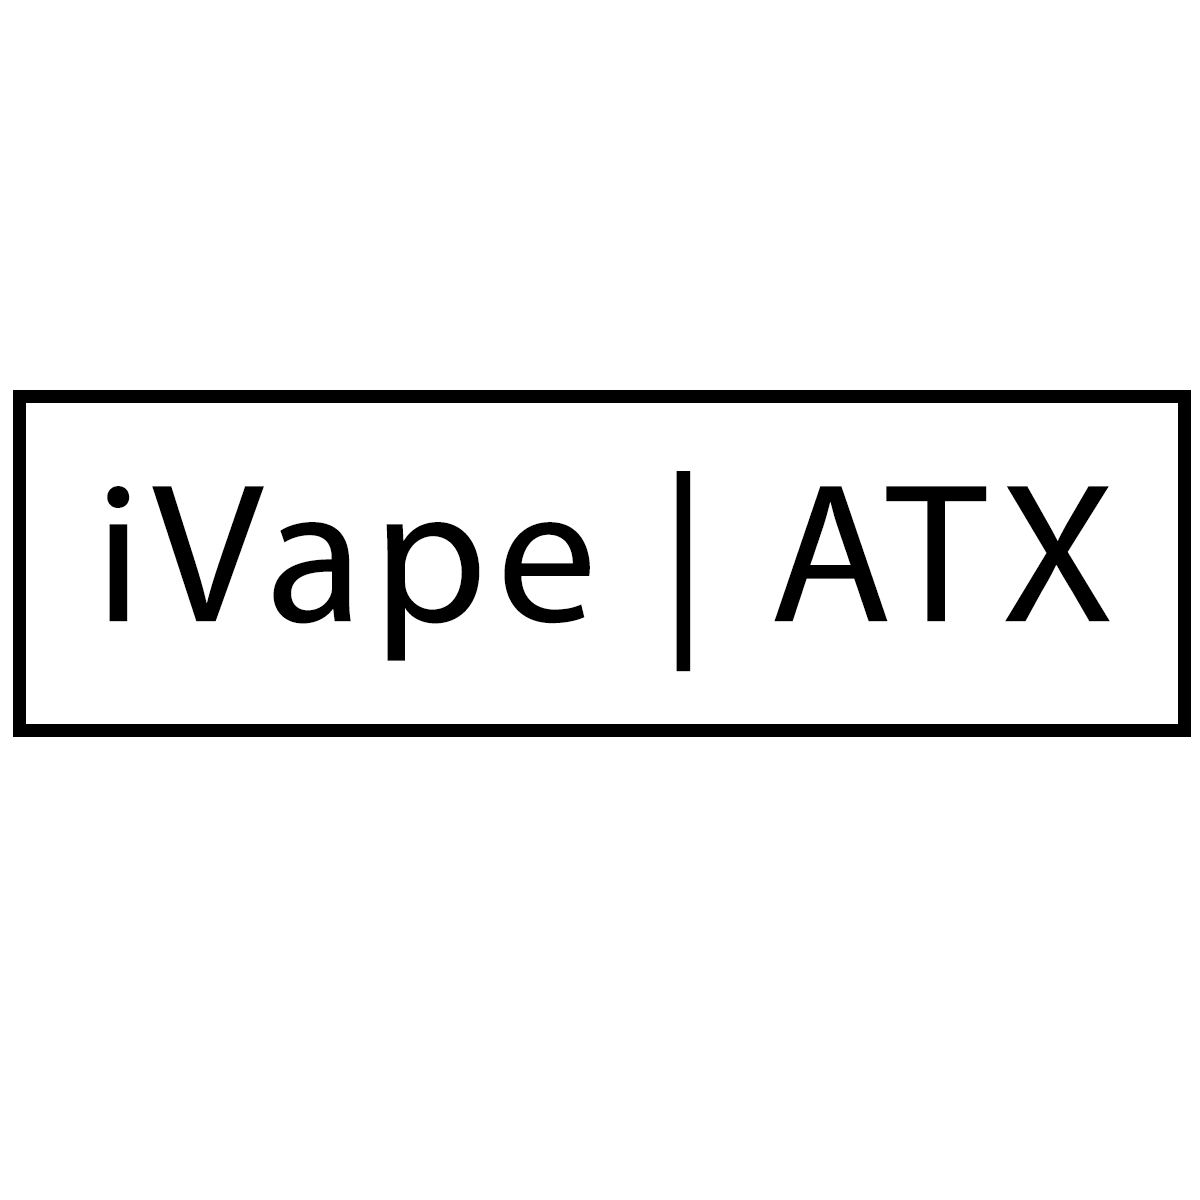 iVape ATX Logo